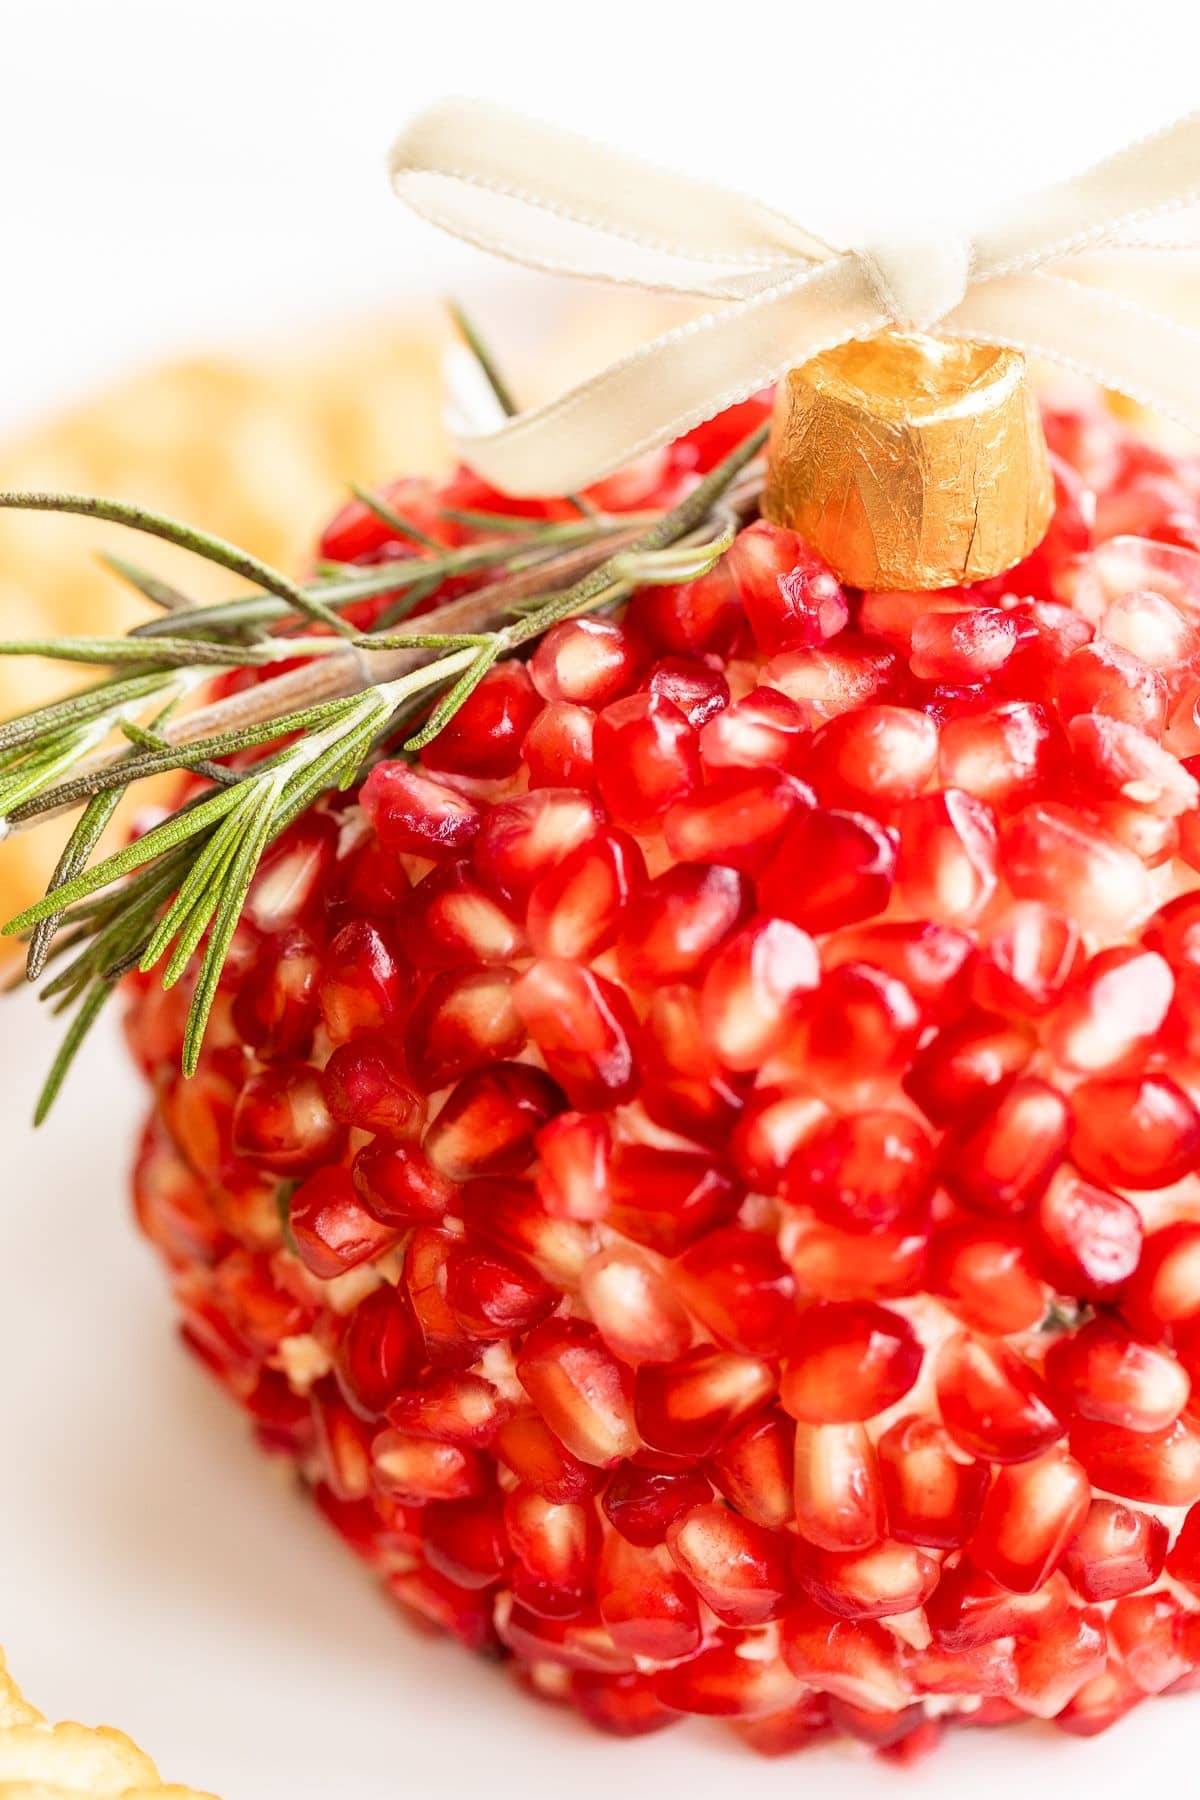 Cheeseball coated with pomegranate arils.